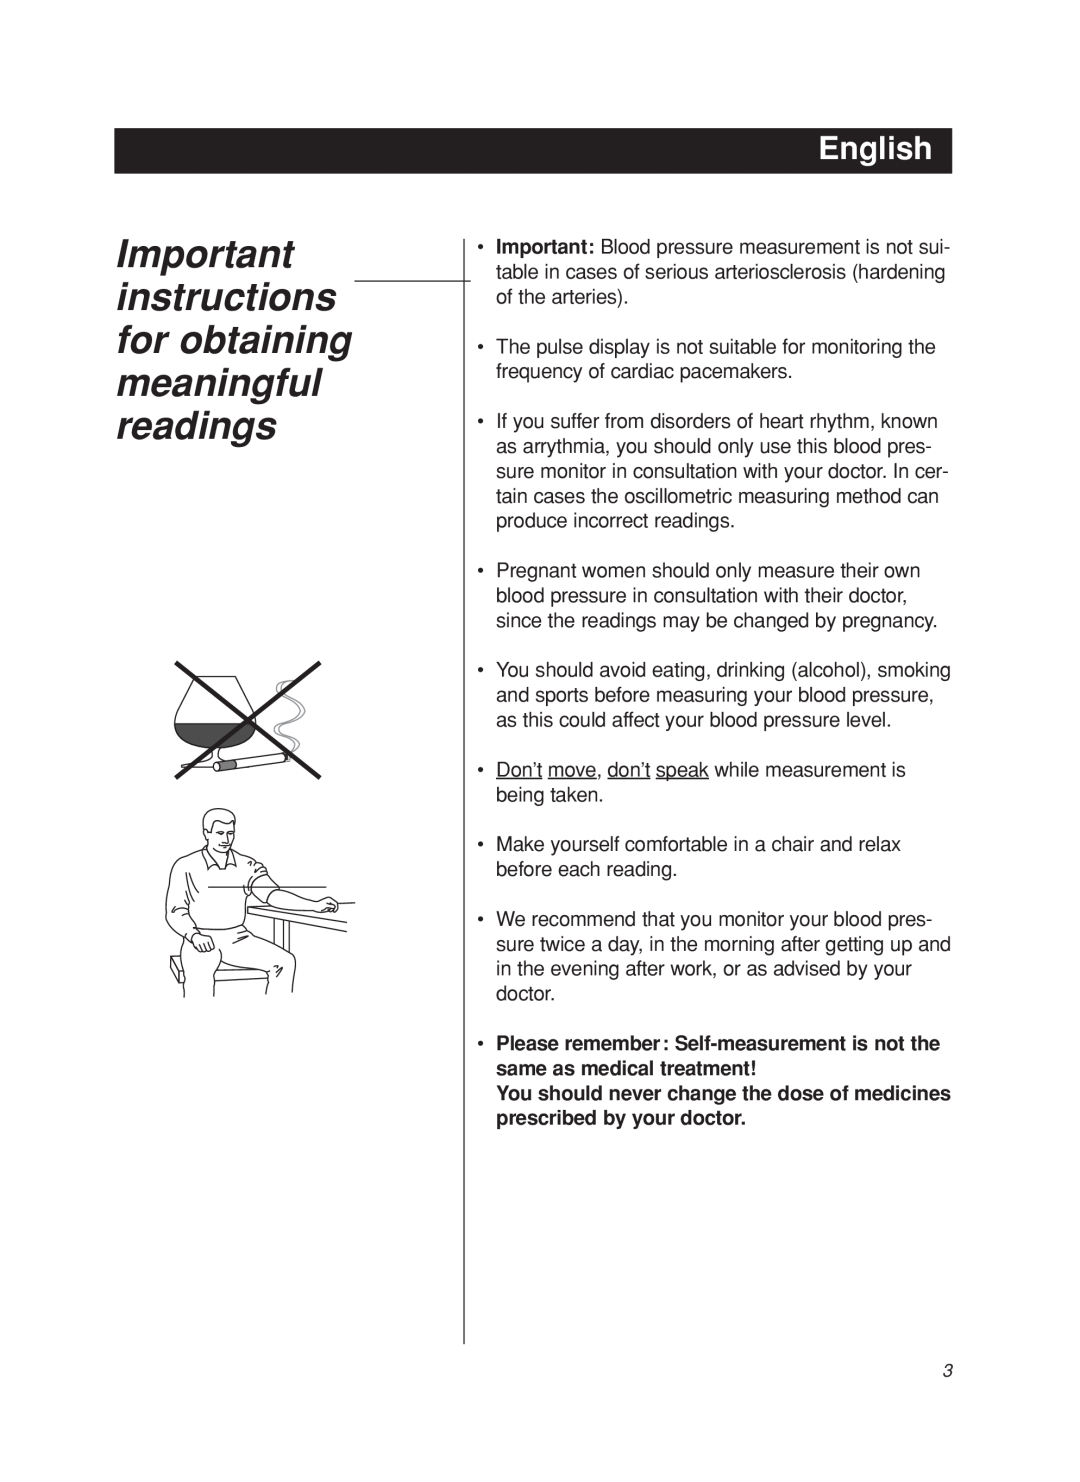 Omron M5-I instruction manual Important instructions for obtaining meaningful readings, English 